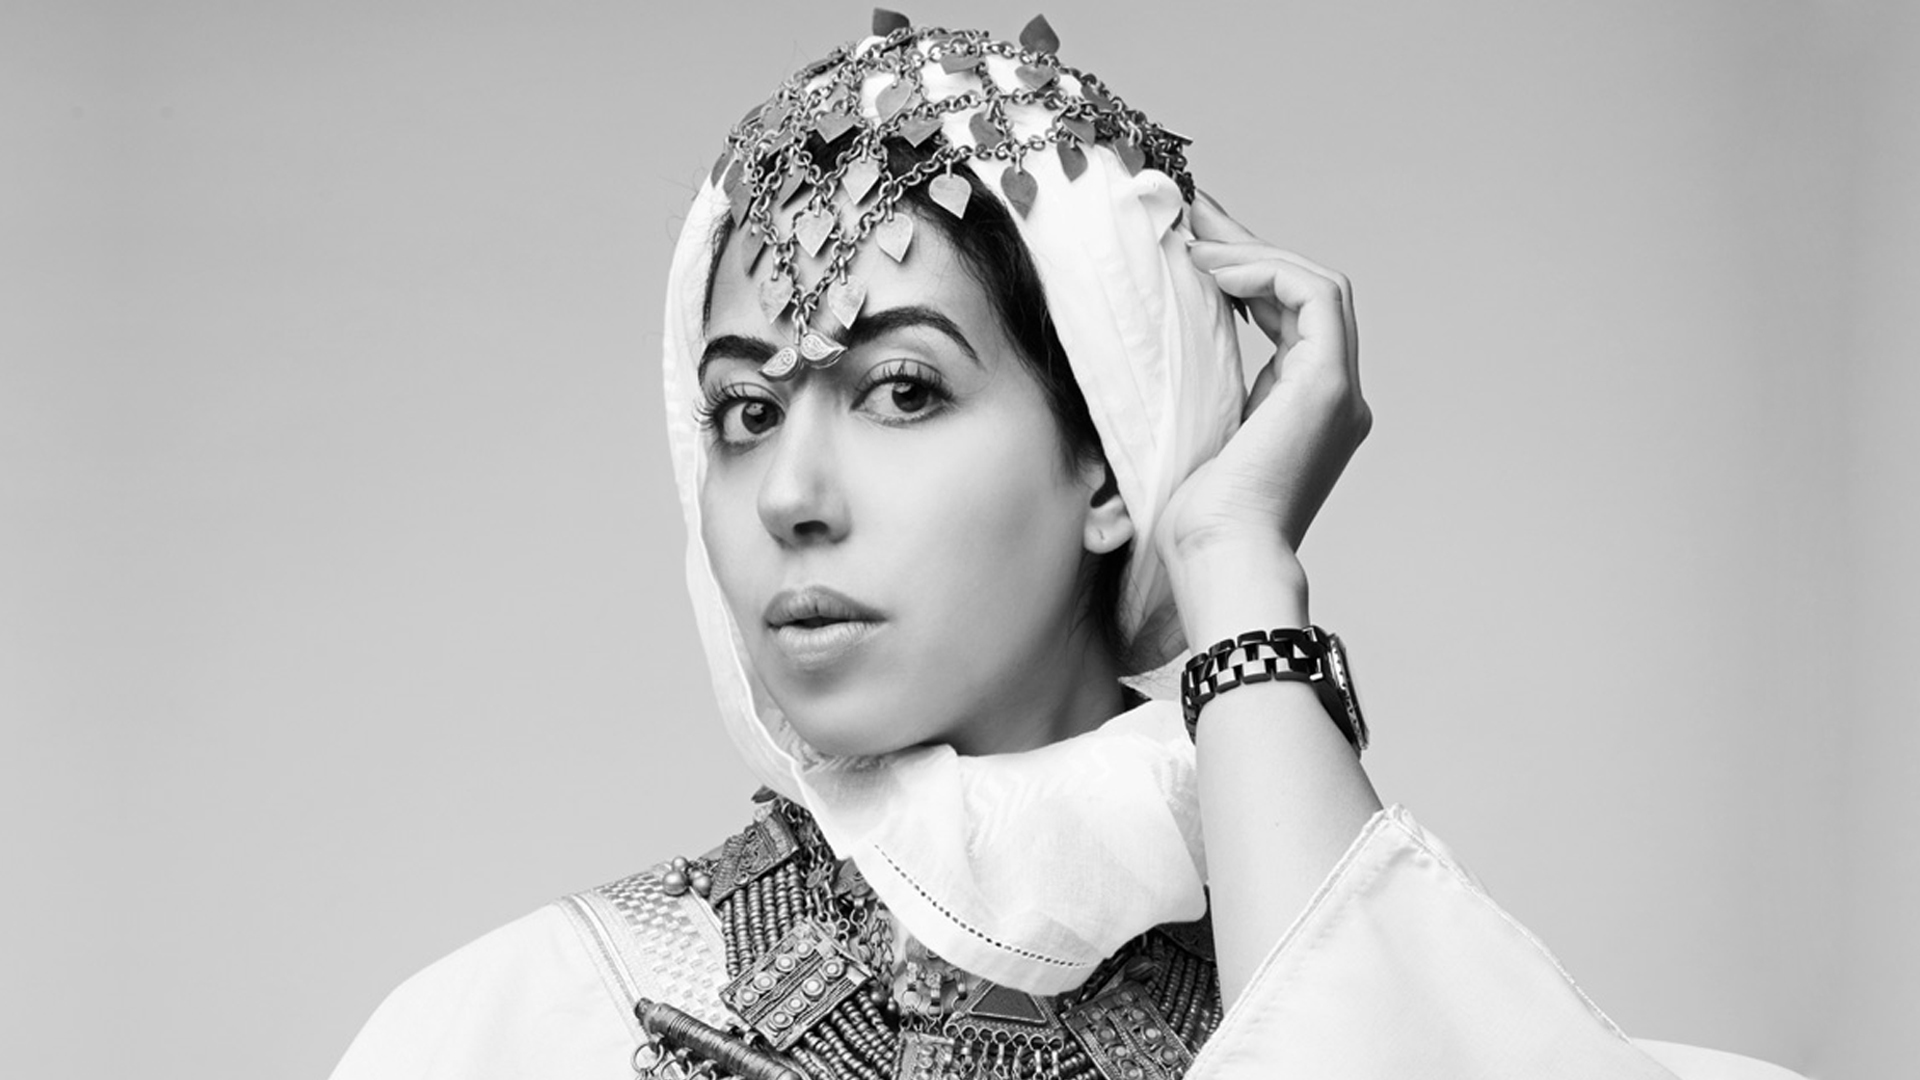 Canon ambassador Tasneem Alsultan breaks gender stereotypes through photography